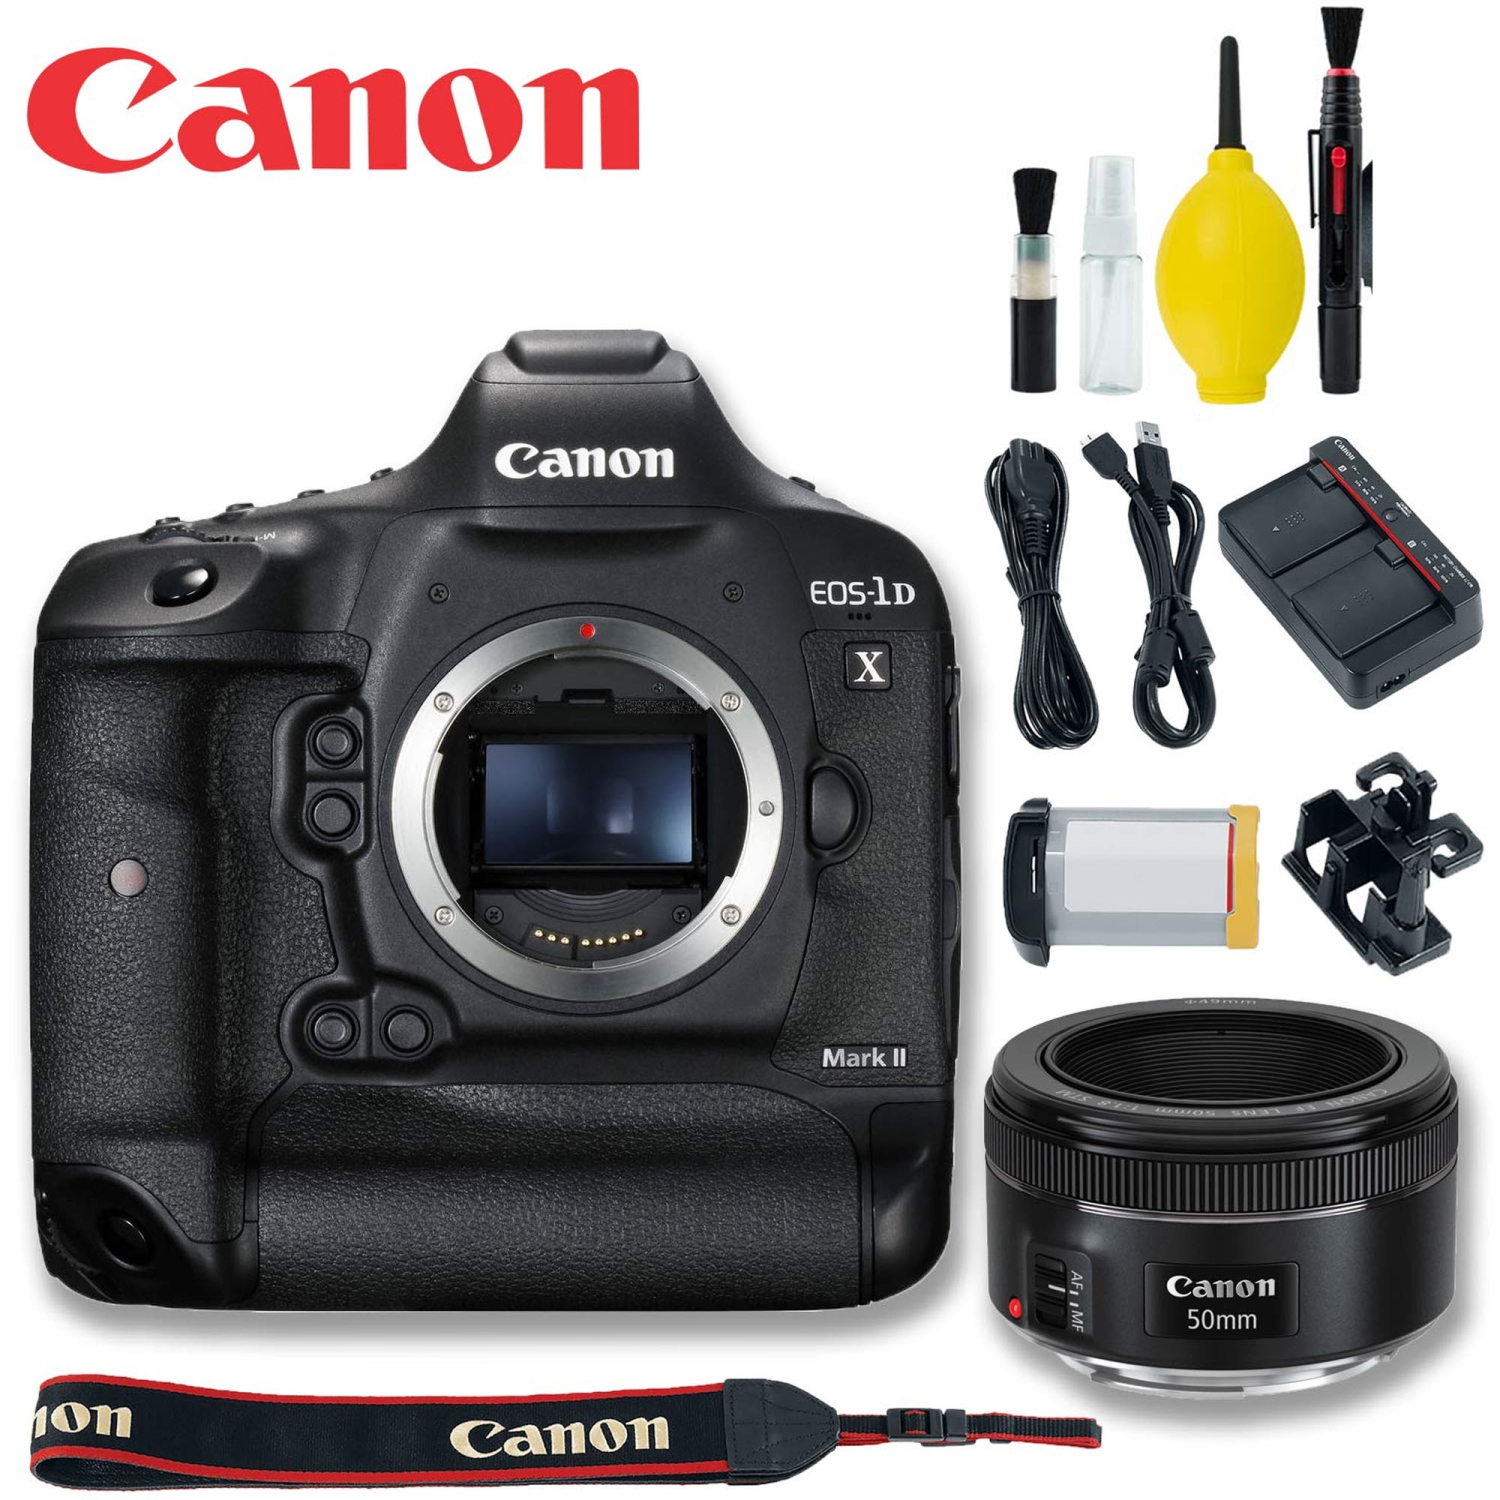 Canon EOS-1D X Mark II DSLR Camera with Canon 50mm 1.8 STM Lens Basic Kit - US Version w/ Seller Warranty